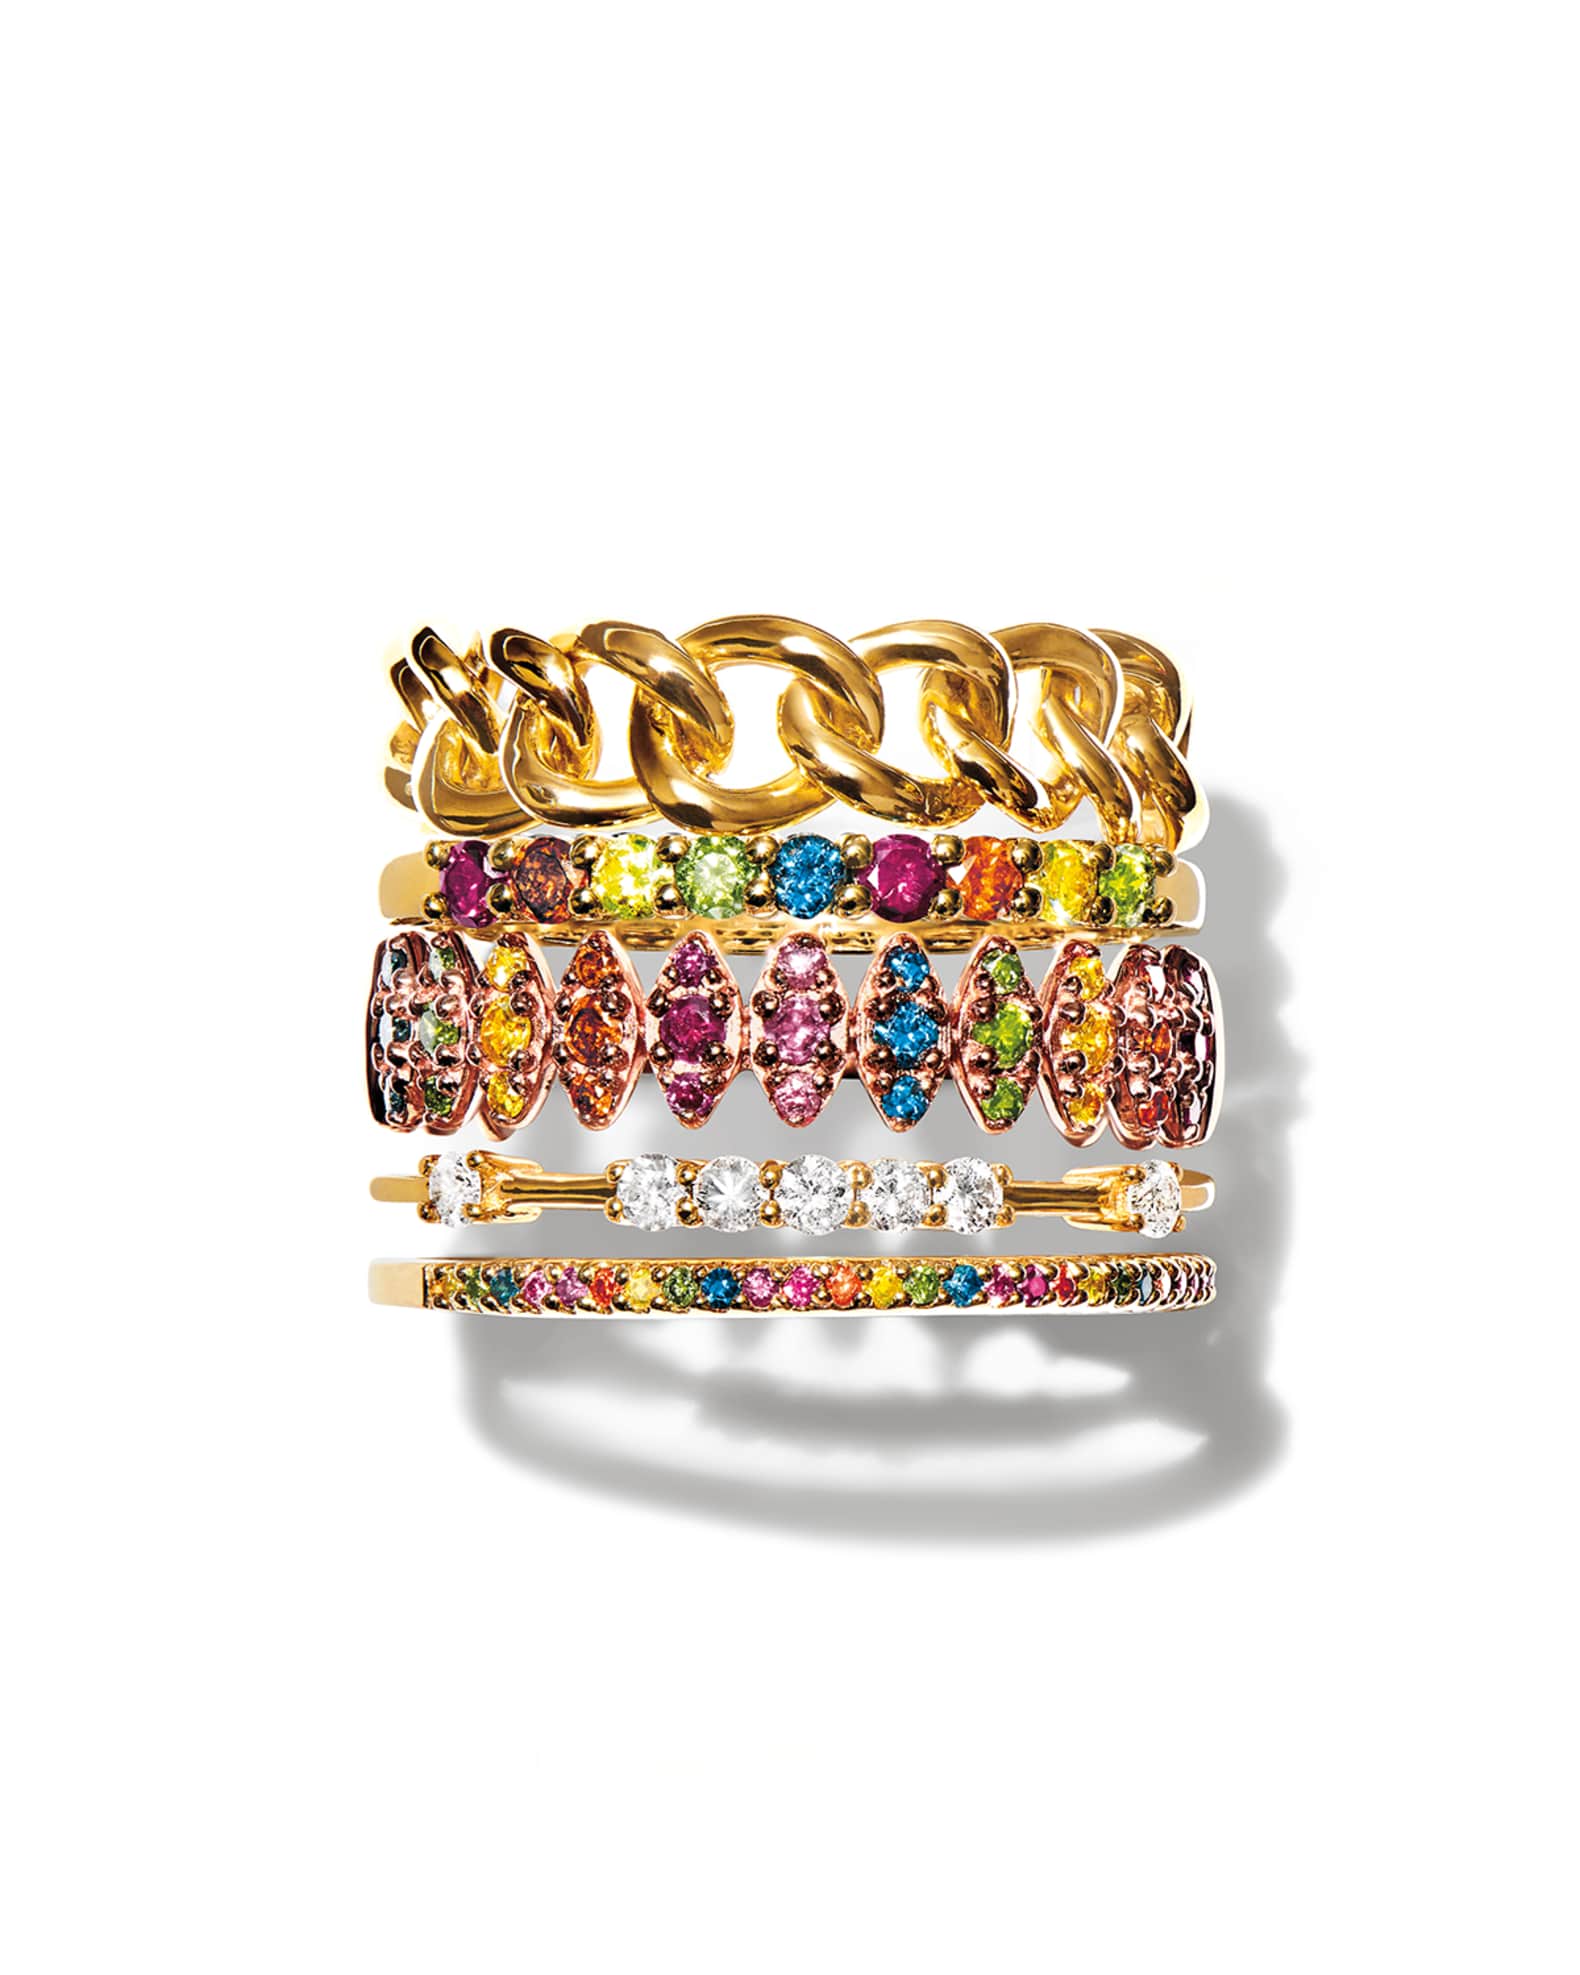 Stevie Wren 14k Gold Rainbow Colored Diamond Ring, Size 7 | Neiman Marcus